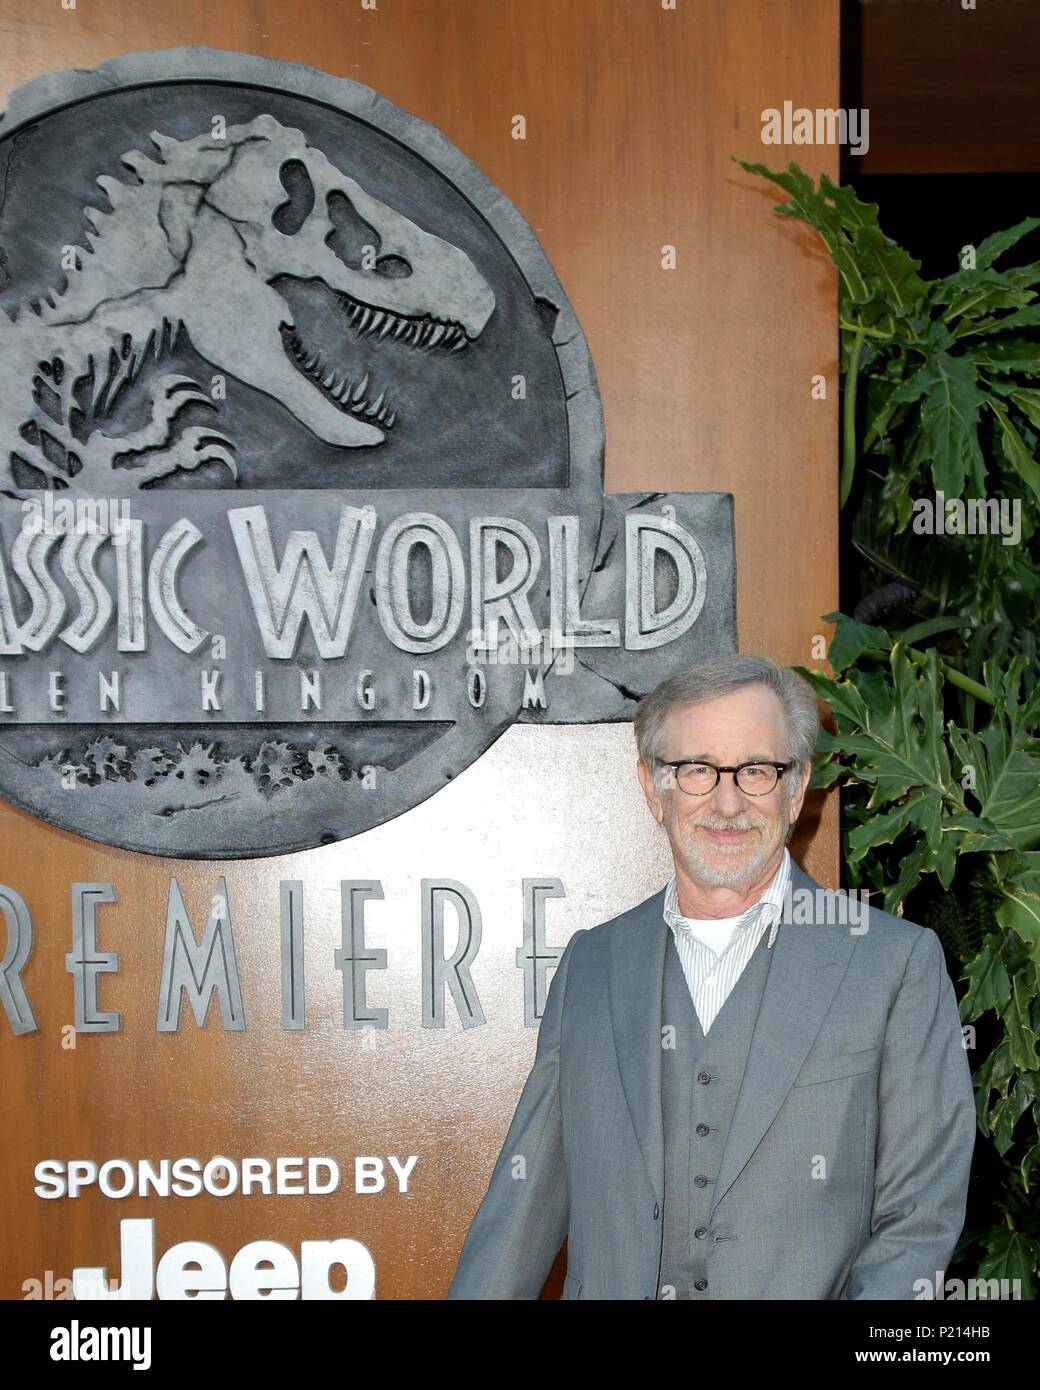 Los Angeles, CA, USA. 12th June, 2018. Steven Spielberg at arrivals for JURASSIC WORLD: FALLEN KINGDOM Premiere, Walt Disney Concert Hall, Los Angeles, CA June 12, 2018. Credit: Priscilla Grant/Everett Collection/Alamy Live News Stock Photo